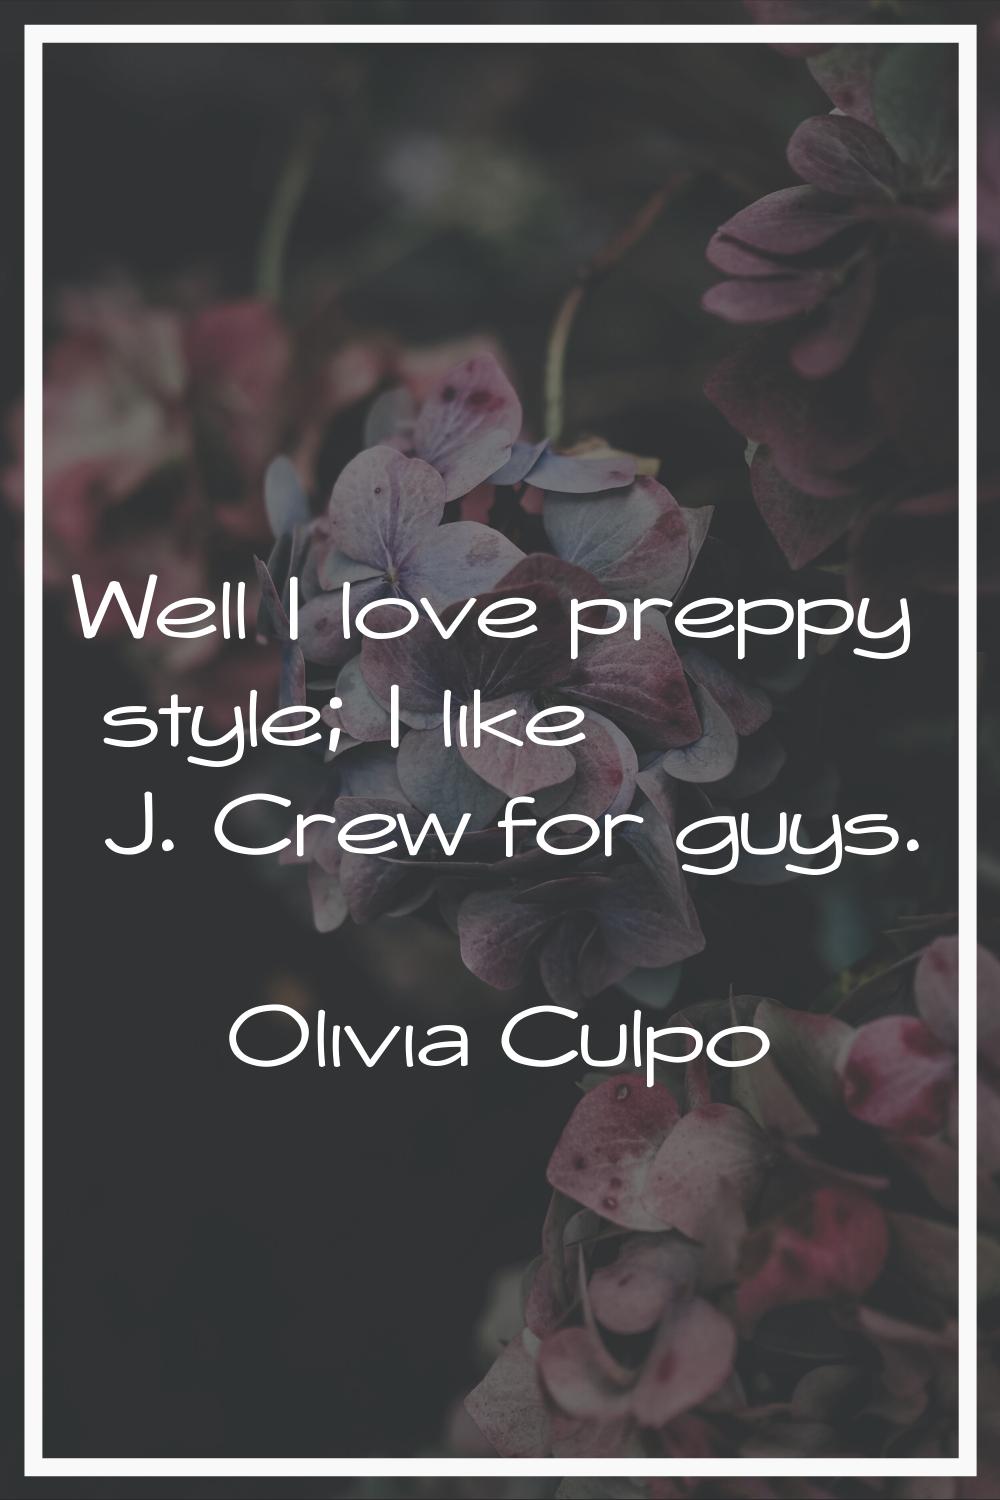 Well I love preppy style; I like J. Crew for guys.